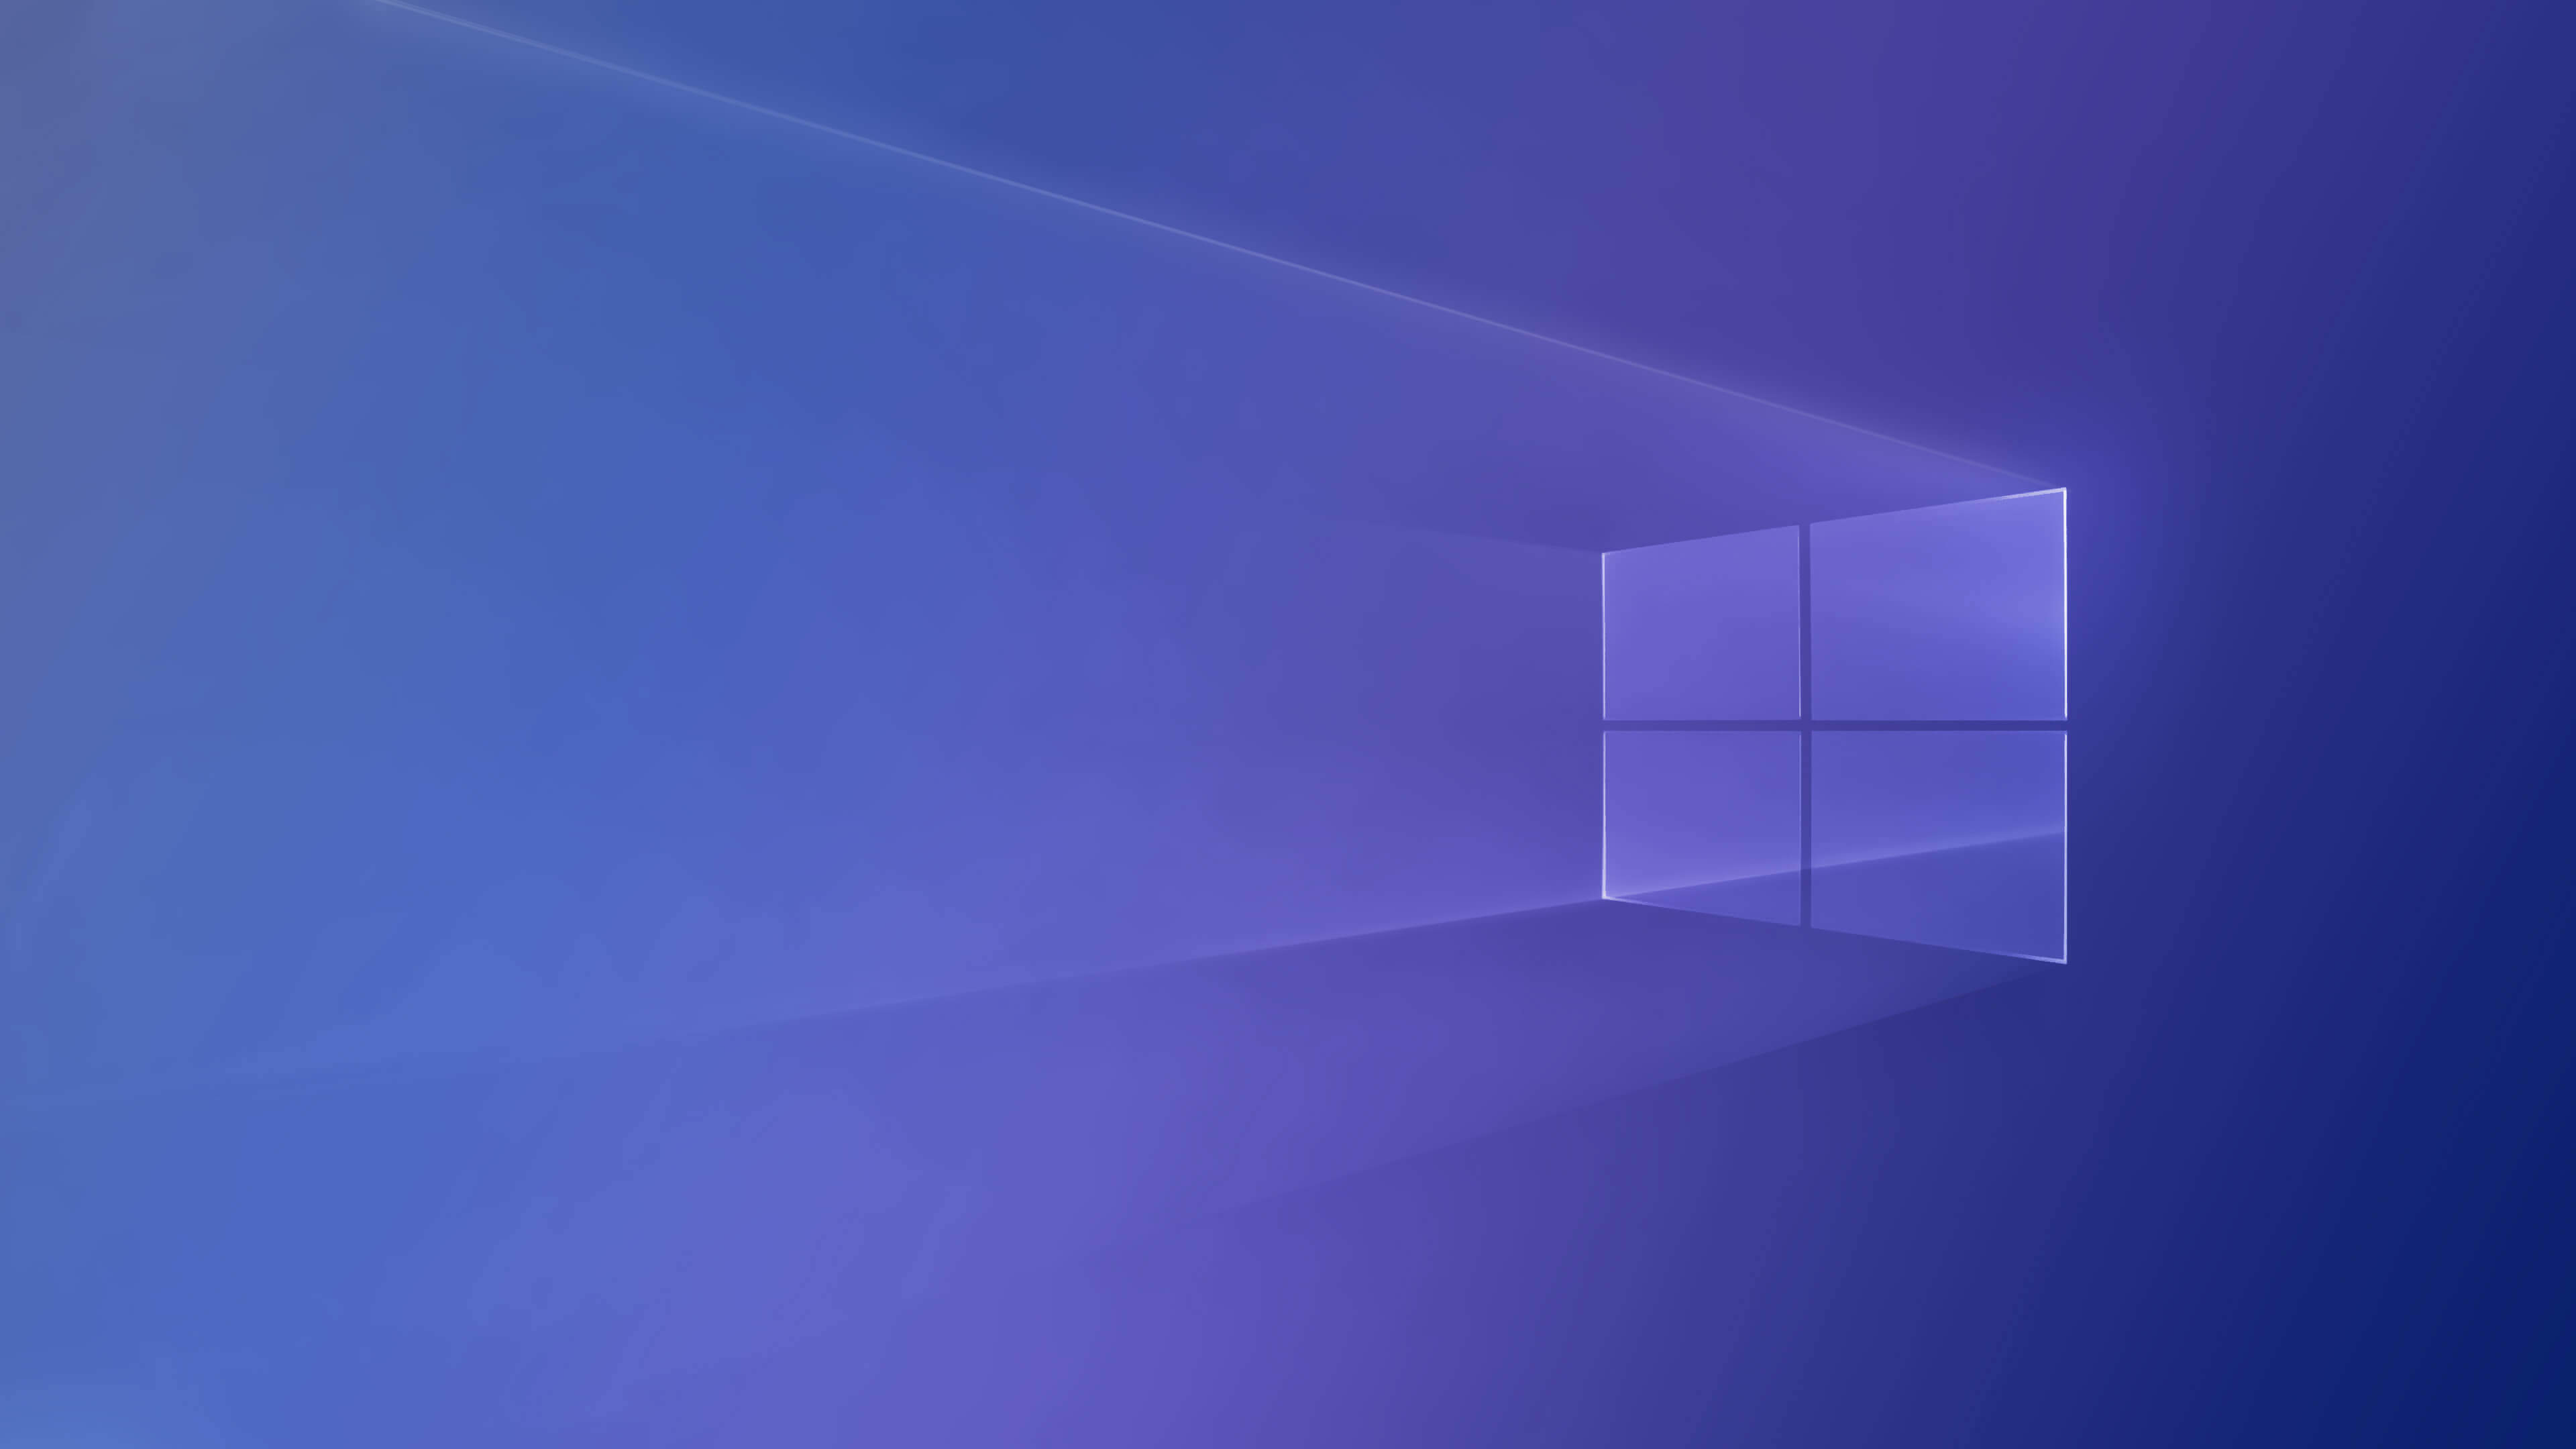 microsoft reveals new windows 10 light theme download